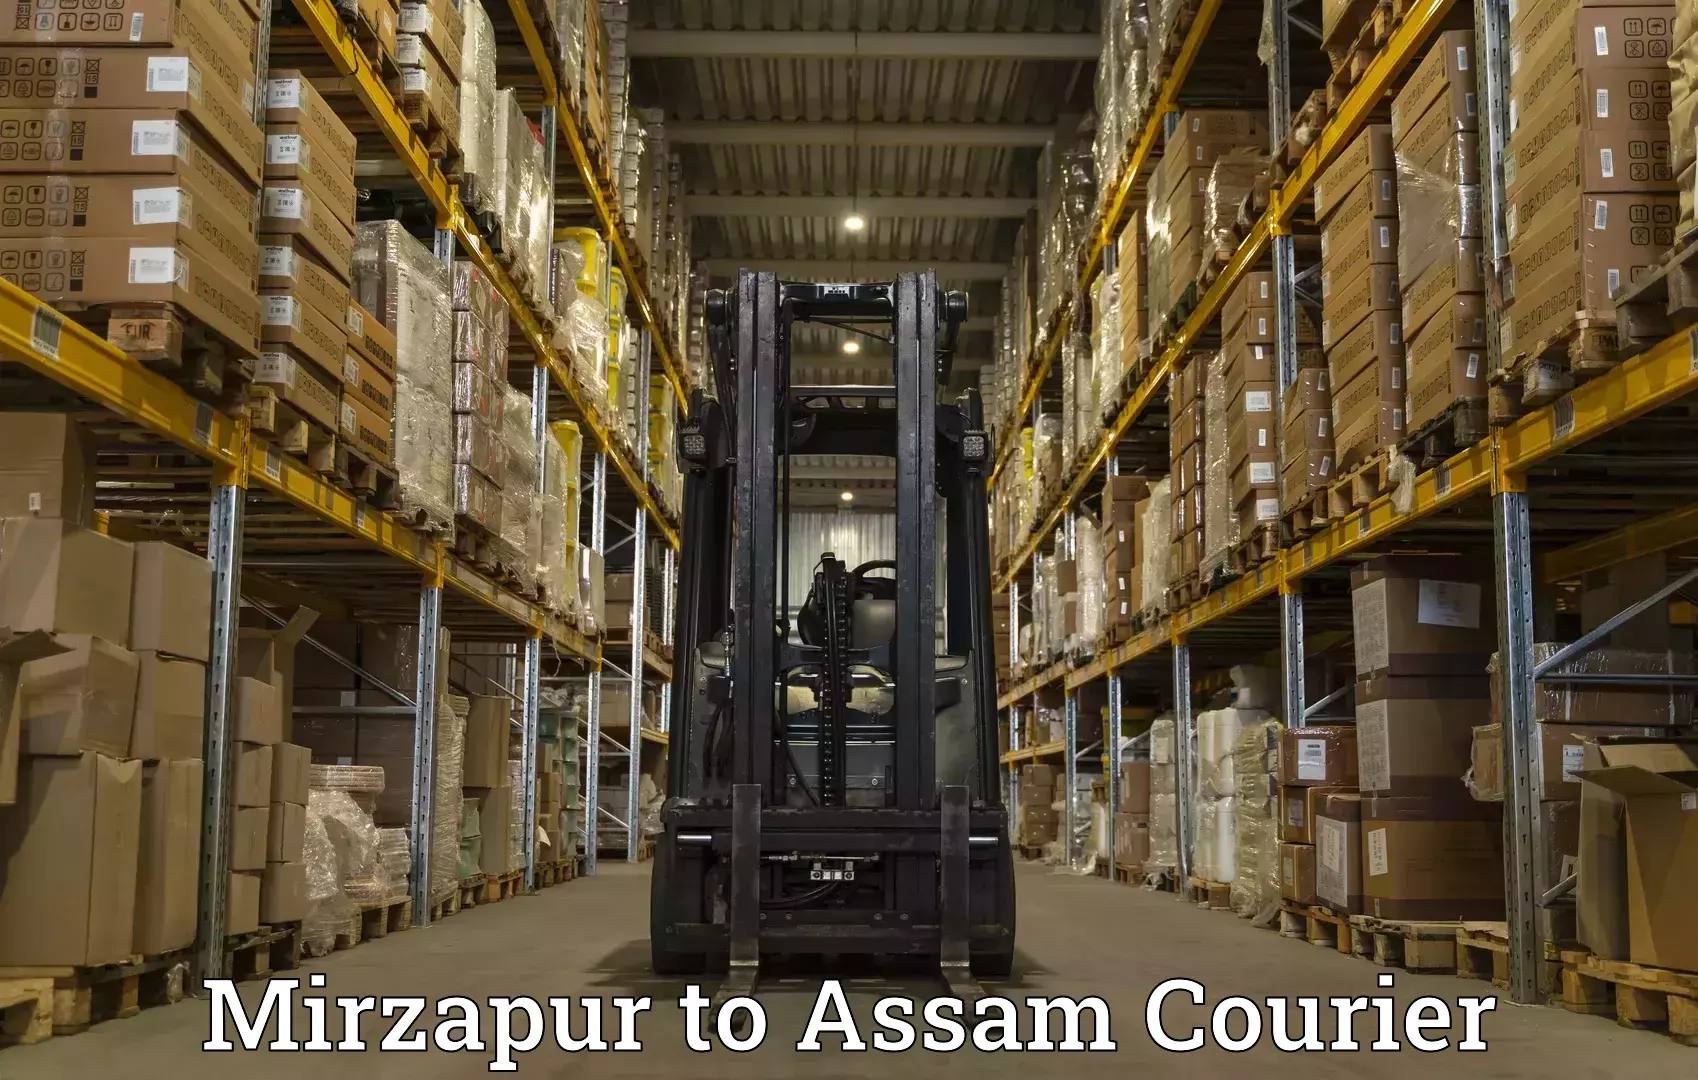 Tech-enabled shipping Mirzapur to Rangia